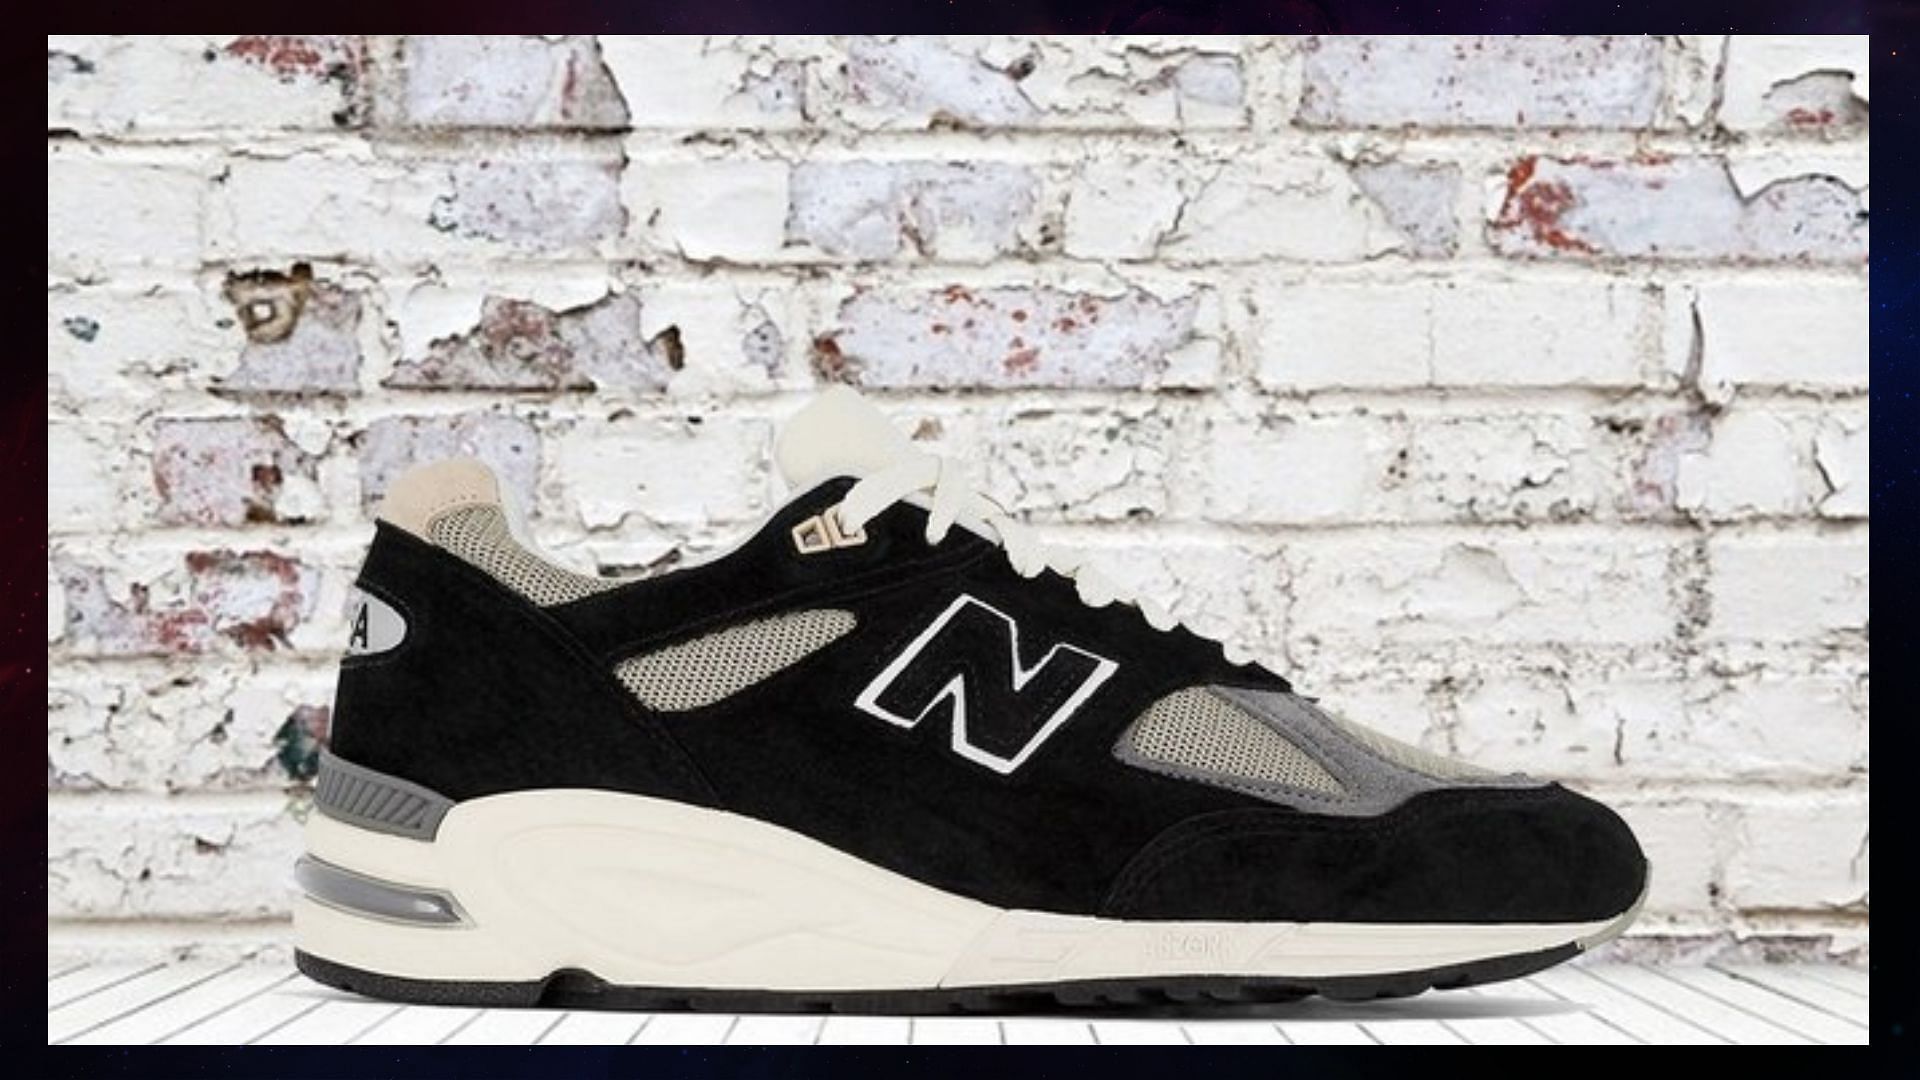 New Balance 990v2 Black shoes (Image via Twitter/@theillestpl)